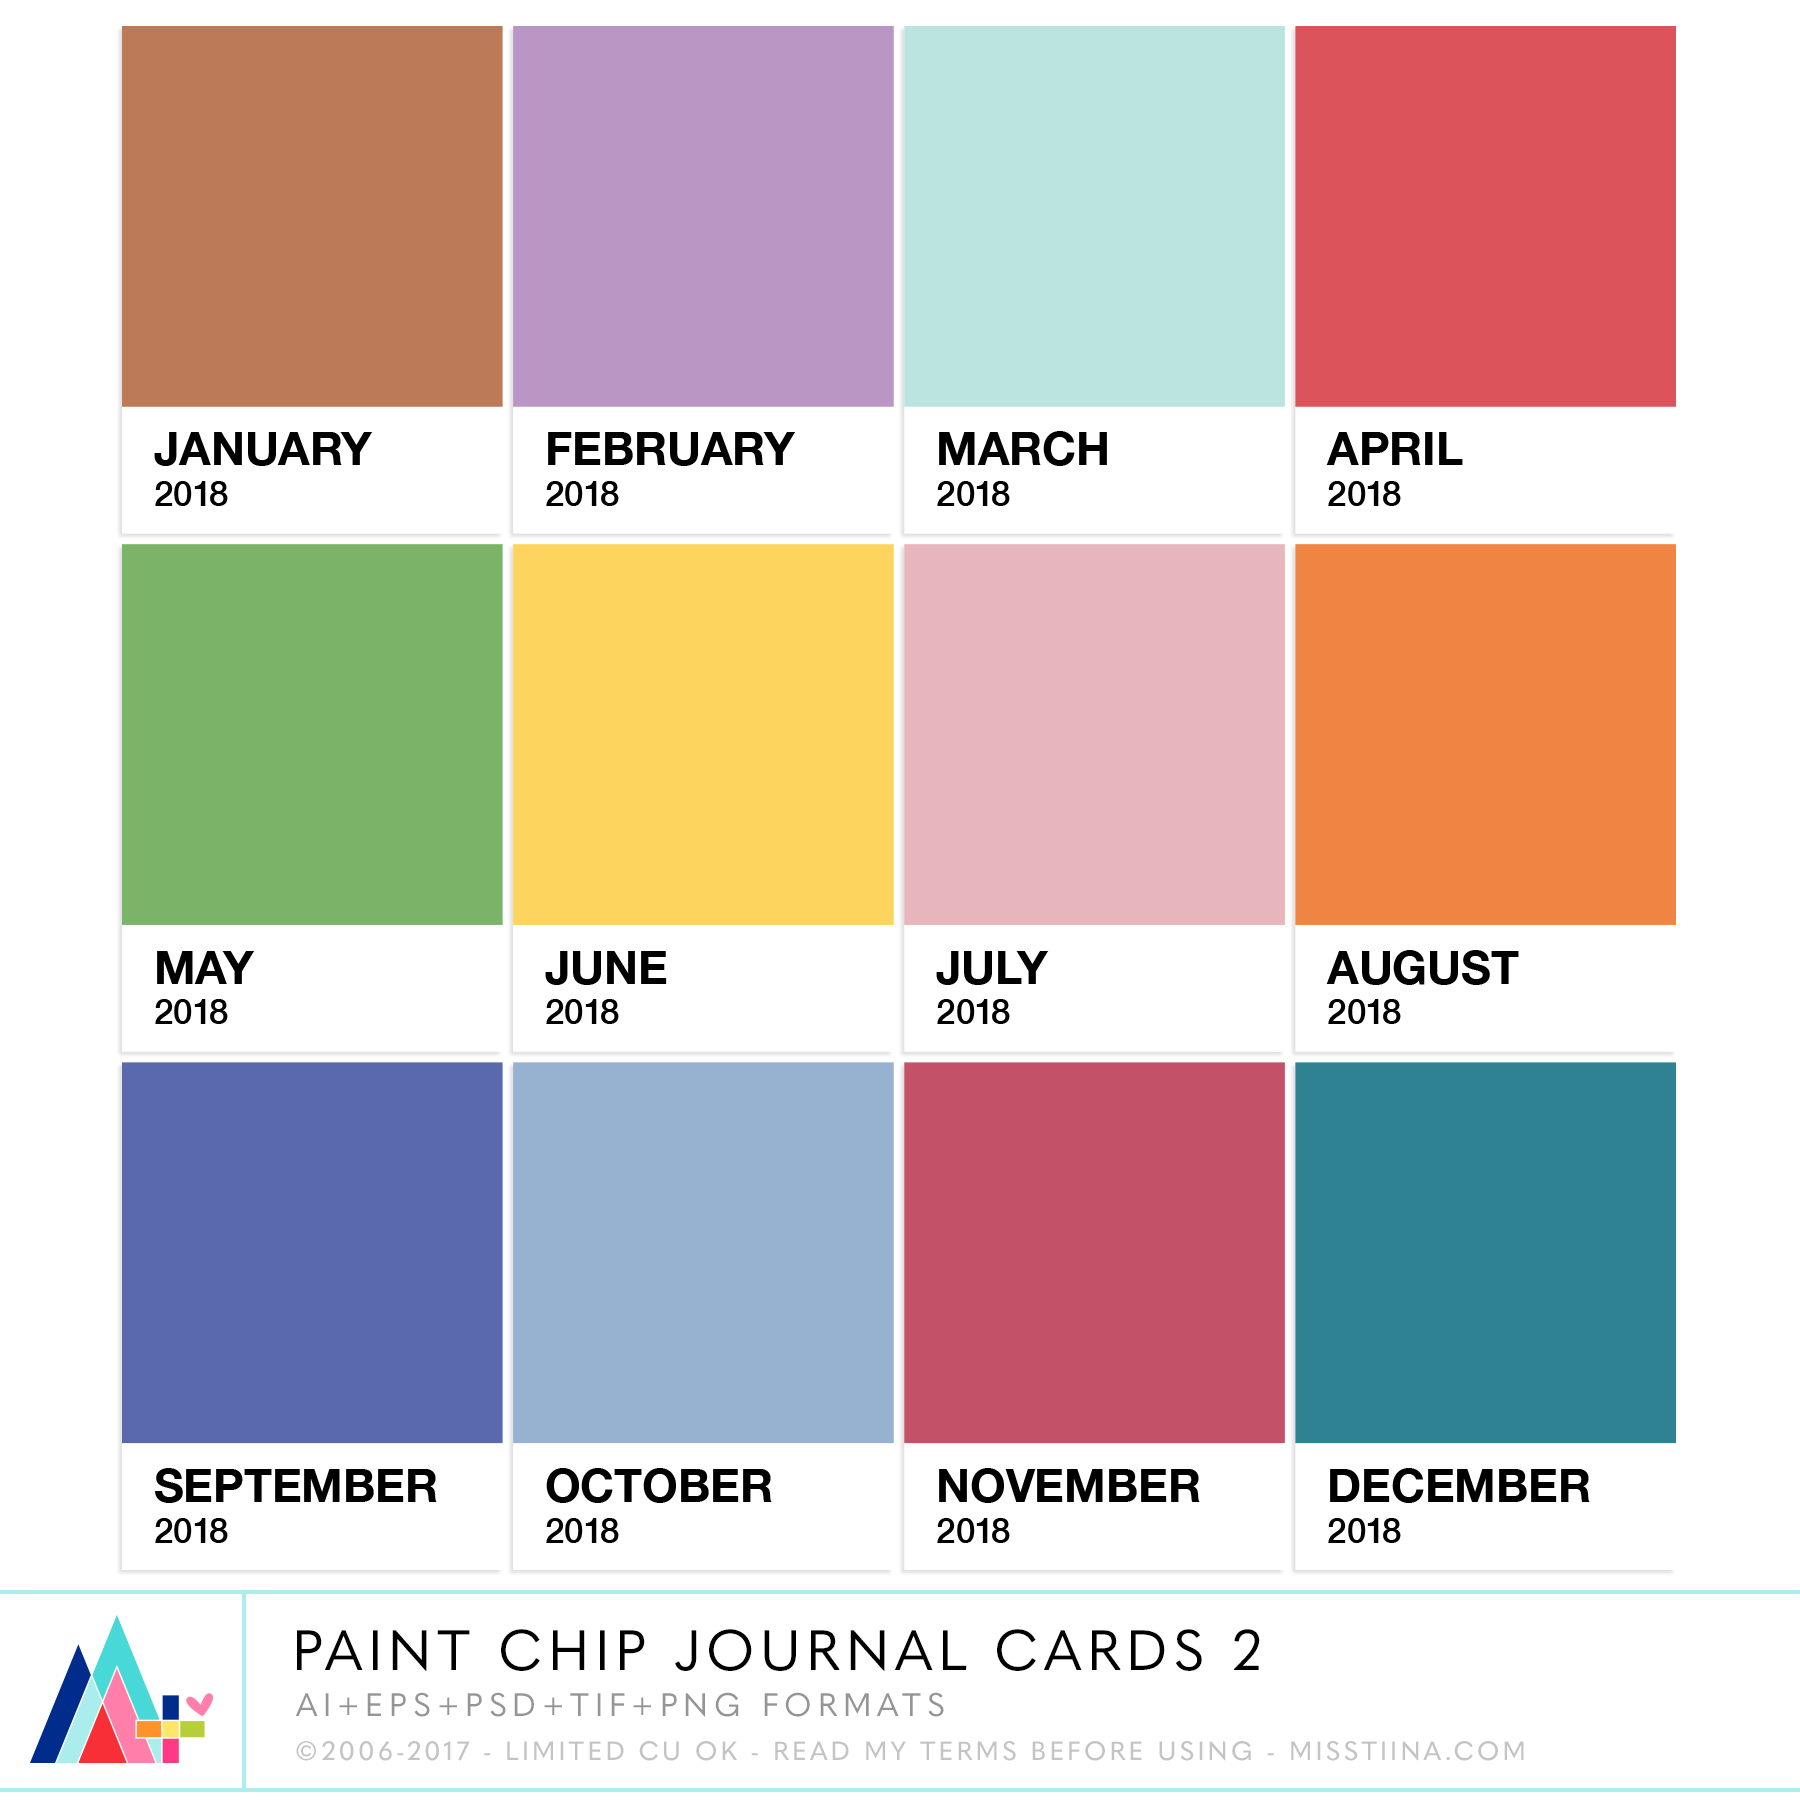 Miss Tiina + Journal Cards + Paint Chip Journal Cards 2 CU